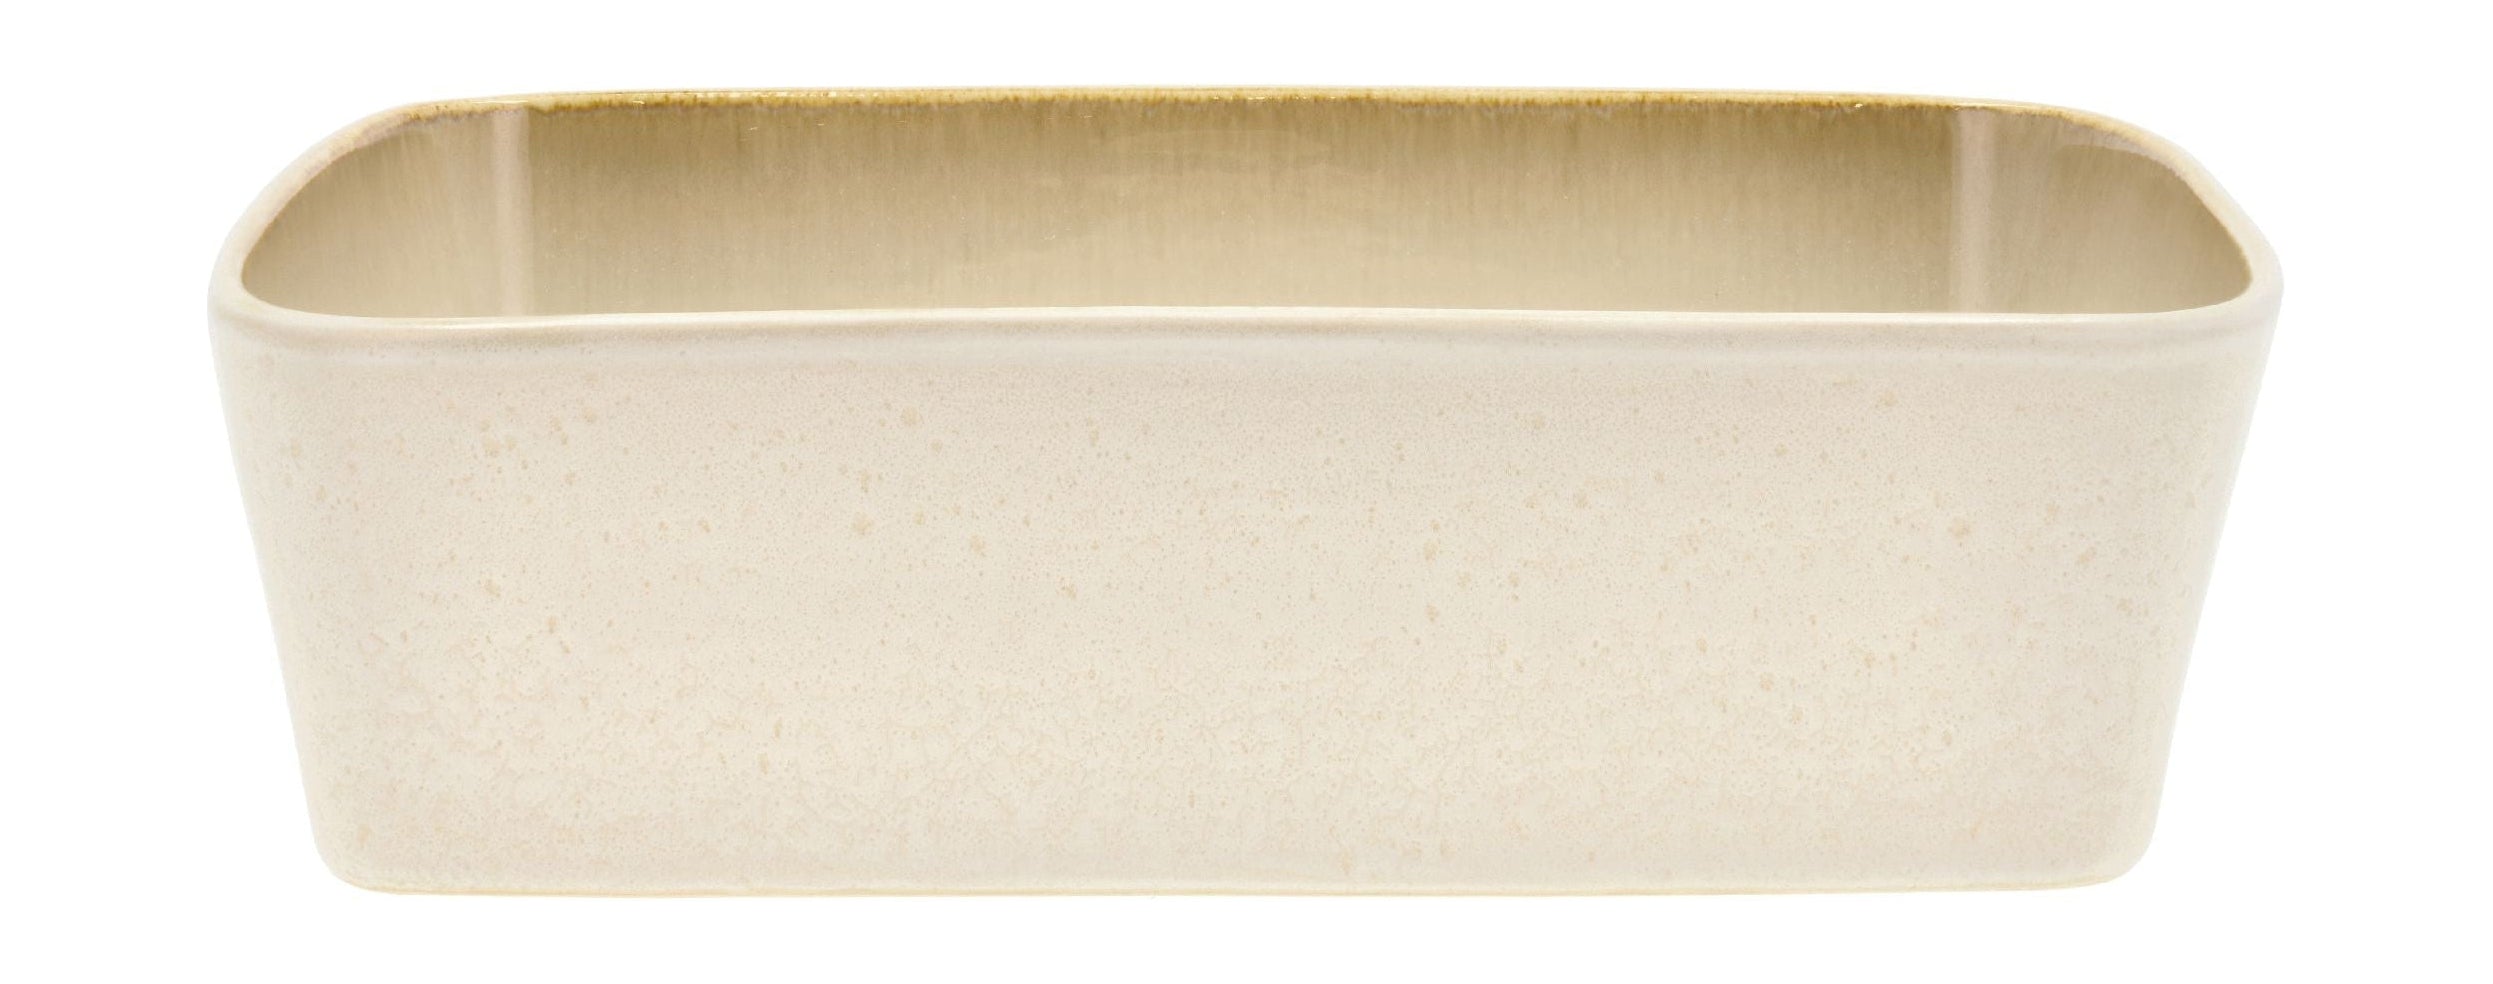 Bitz plato rectangular 28 x 21 x 8 cm, crema/crema